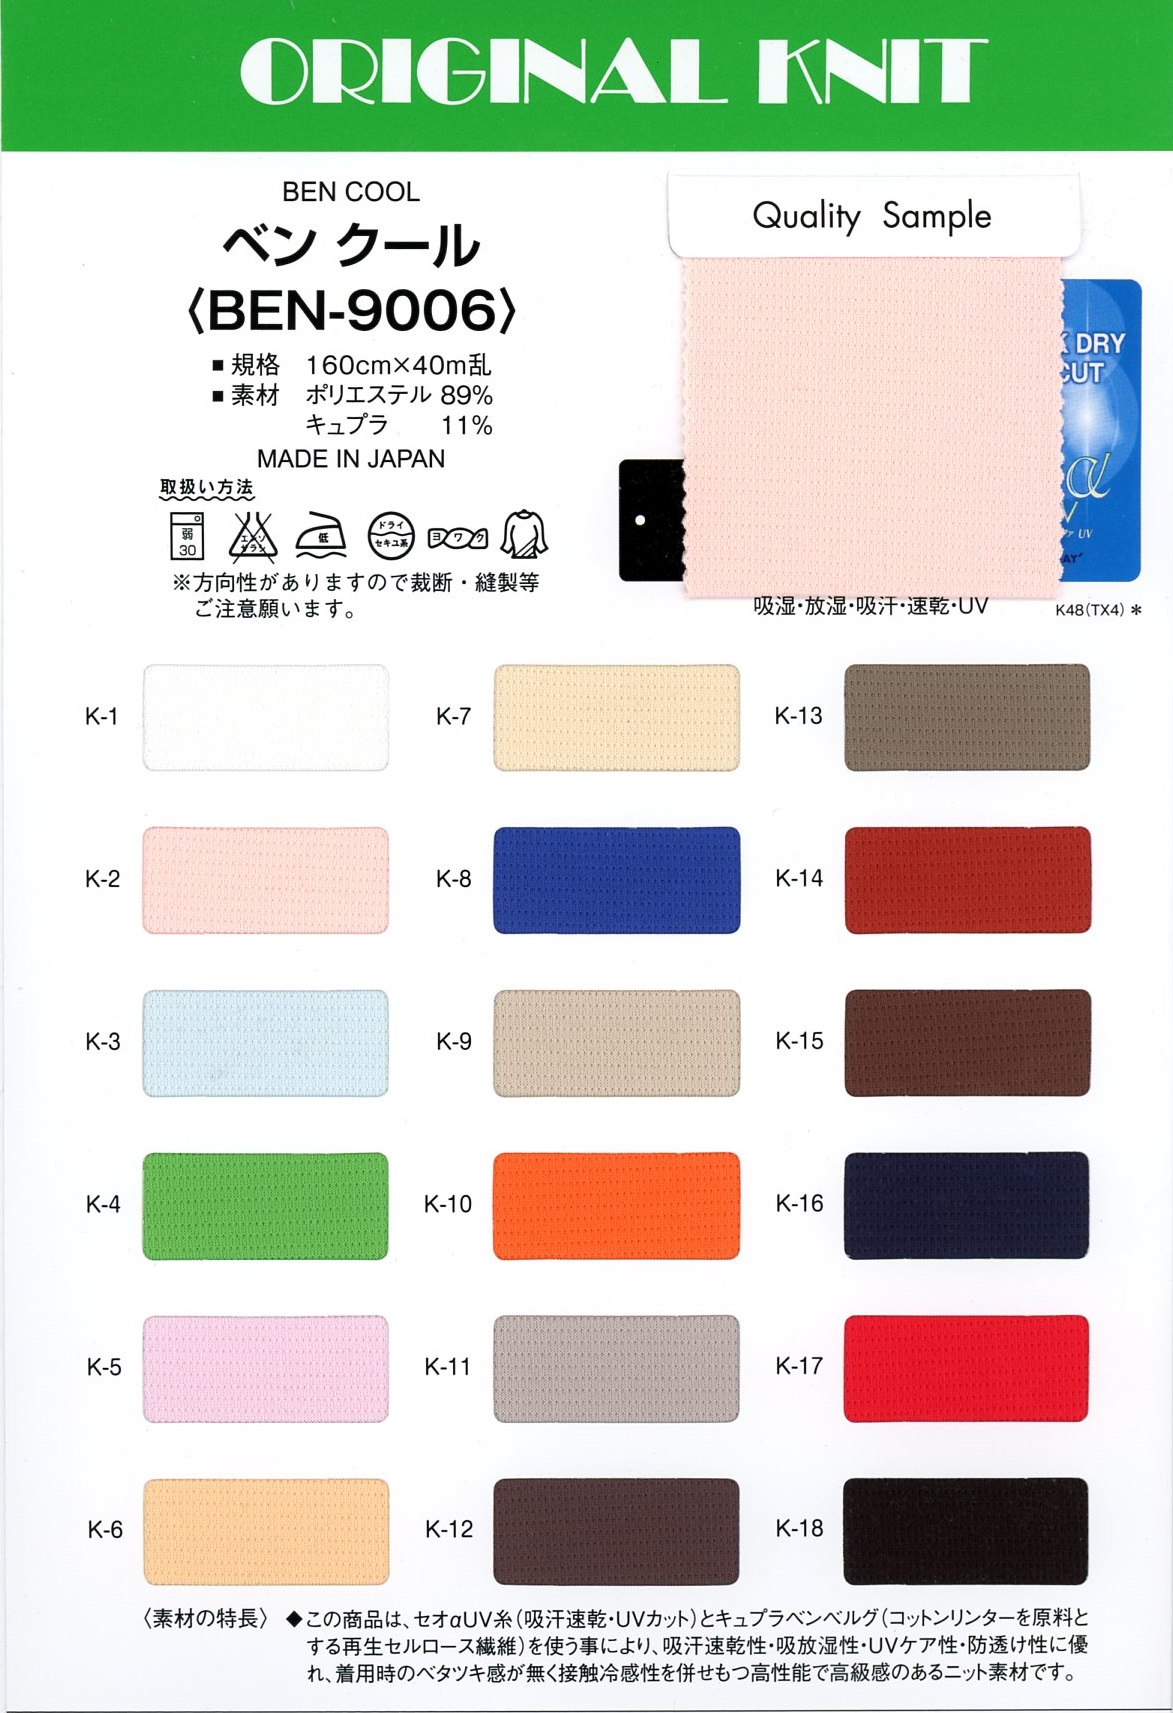 BEN-9006 Ben Cool[Textile / Fabric] Masuda